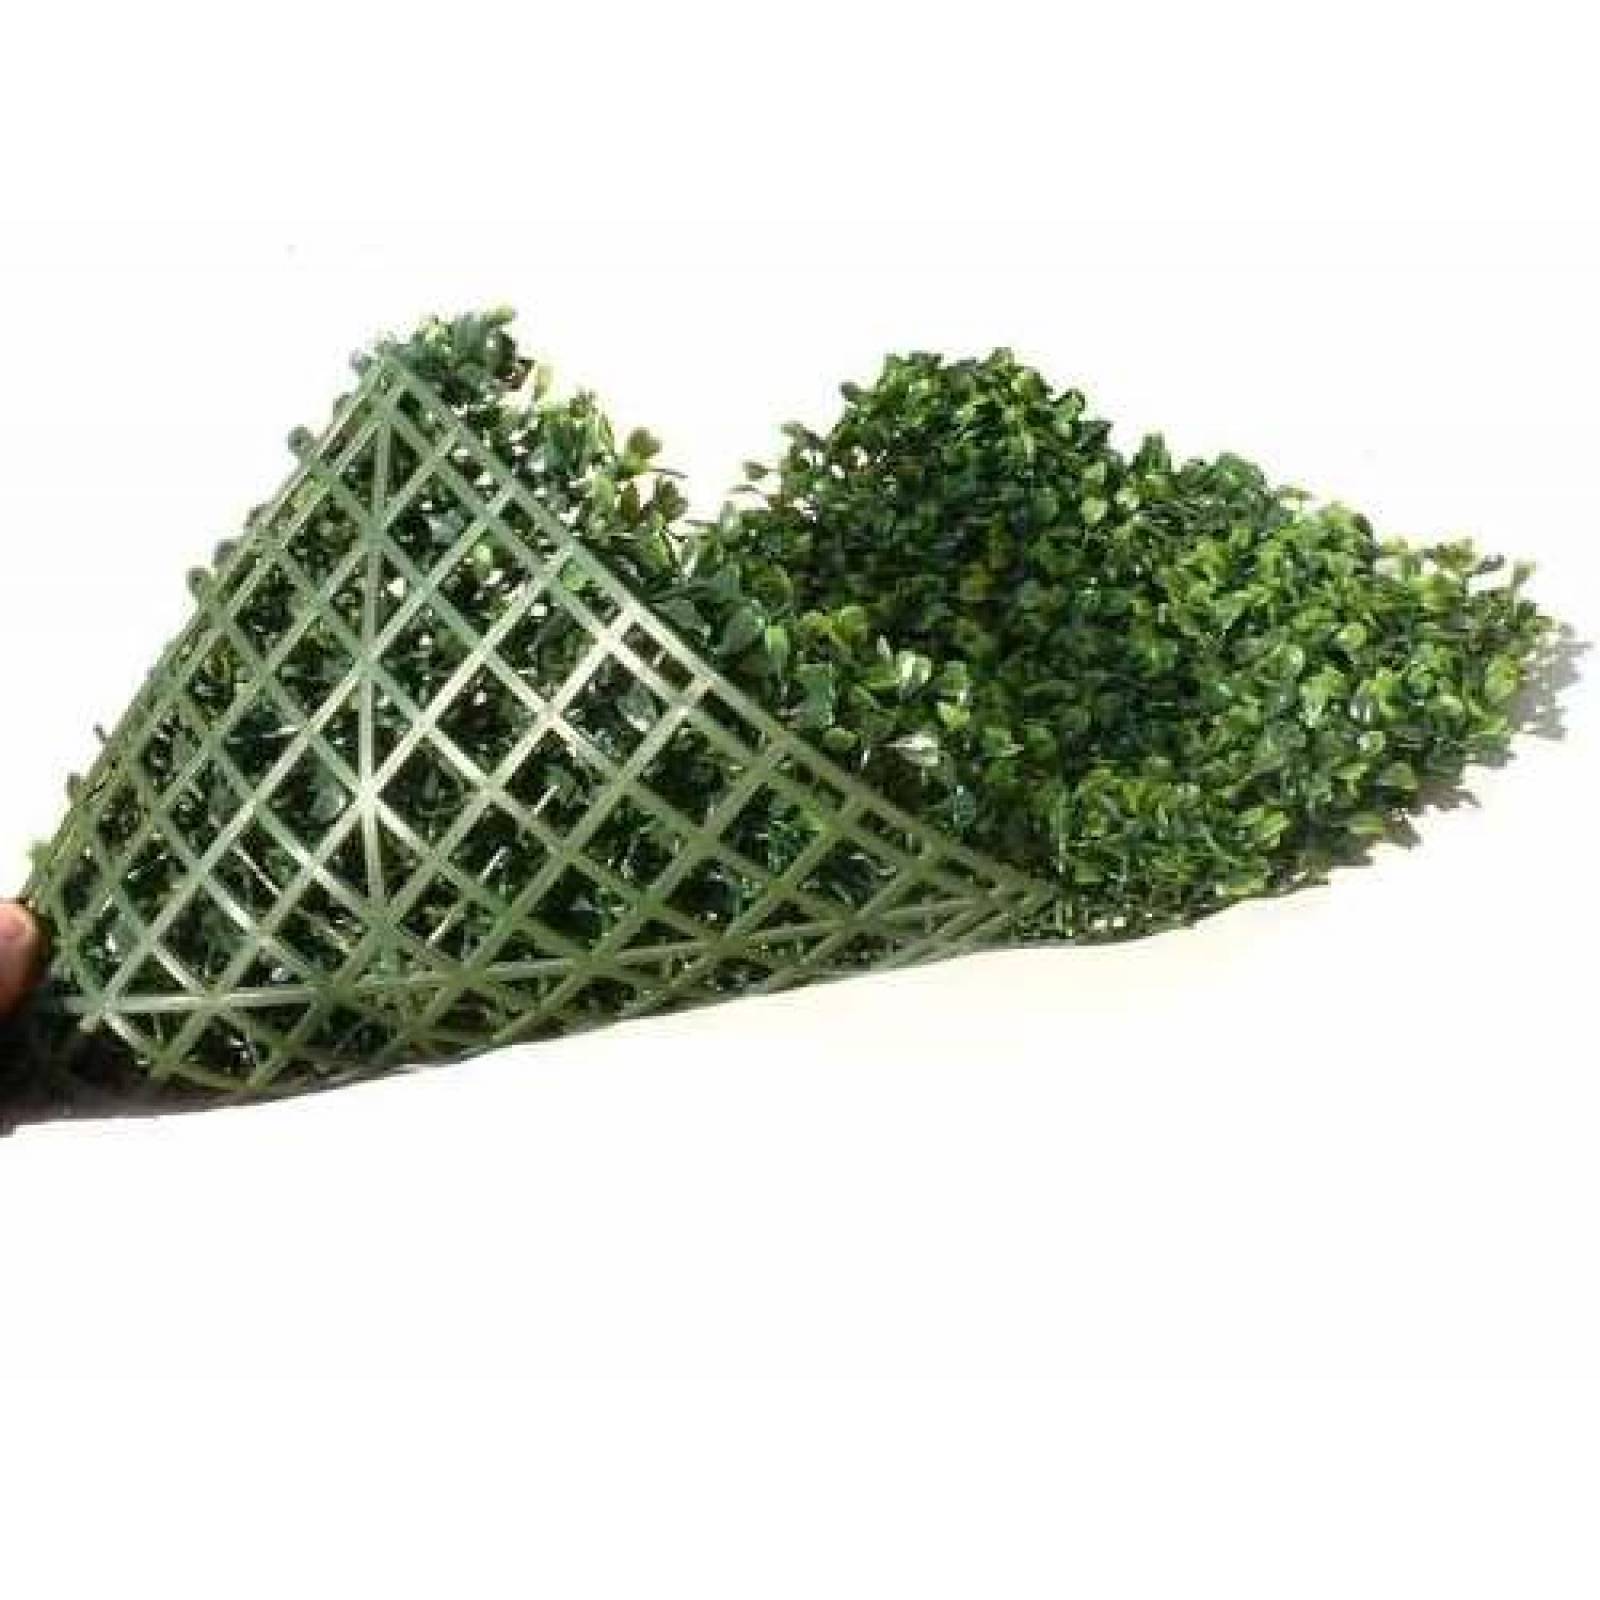 Follaje Artificial Kit 20 Pzas Muro Verde Sintentico Pasto Vertical Pared Jardimex